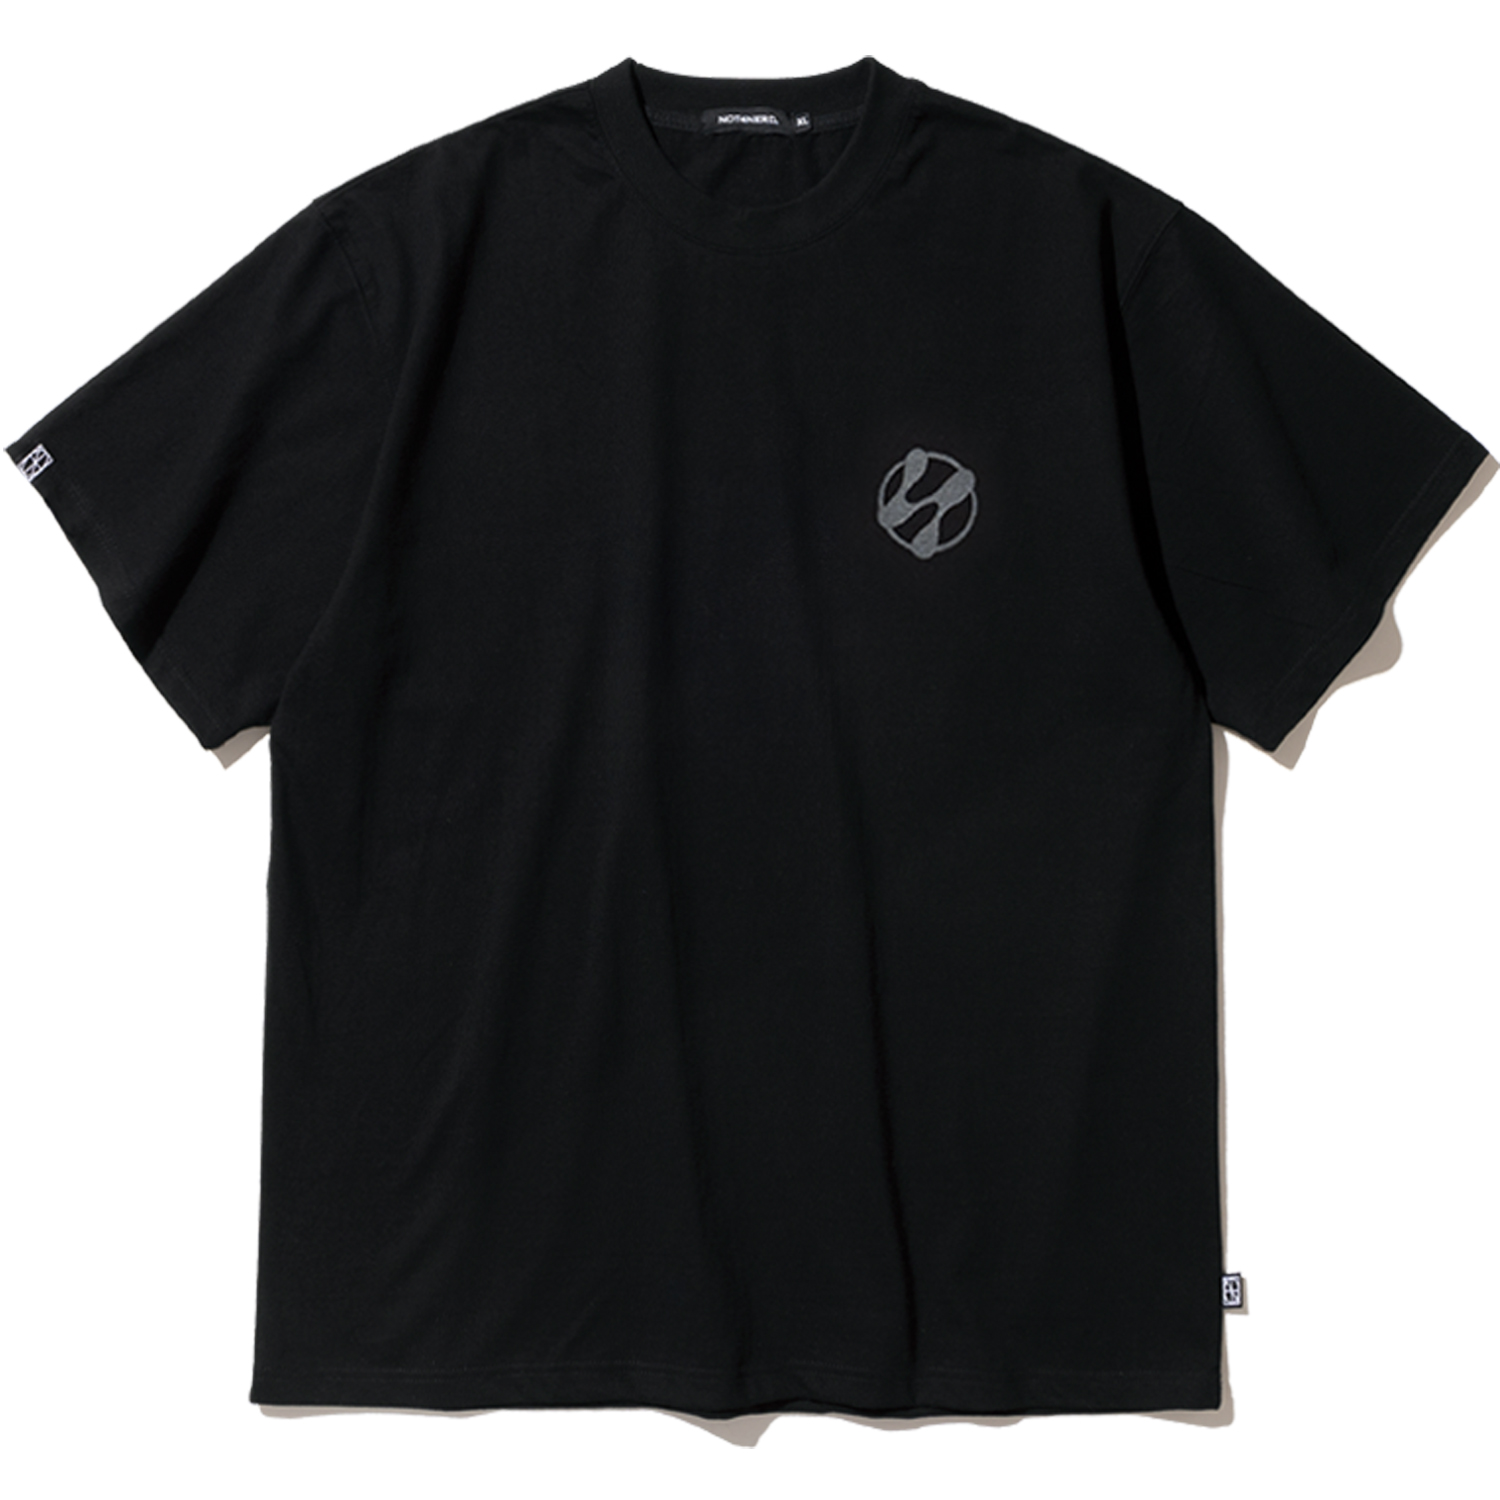 N Symbol T-shirts - Black,NOT4NERD